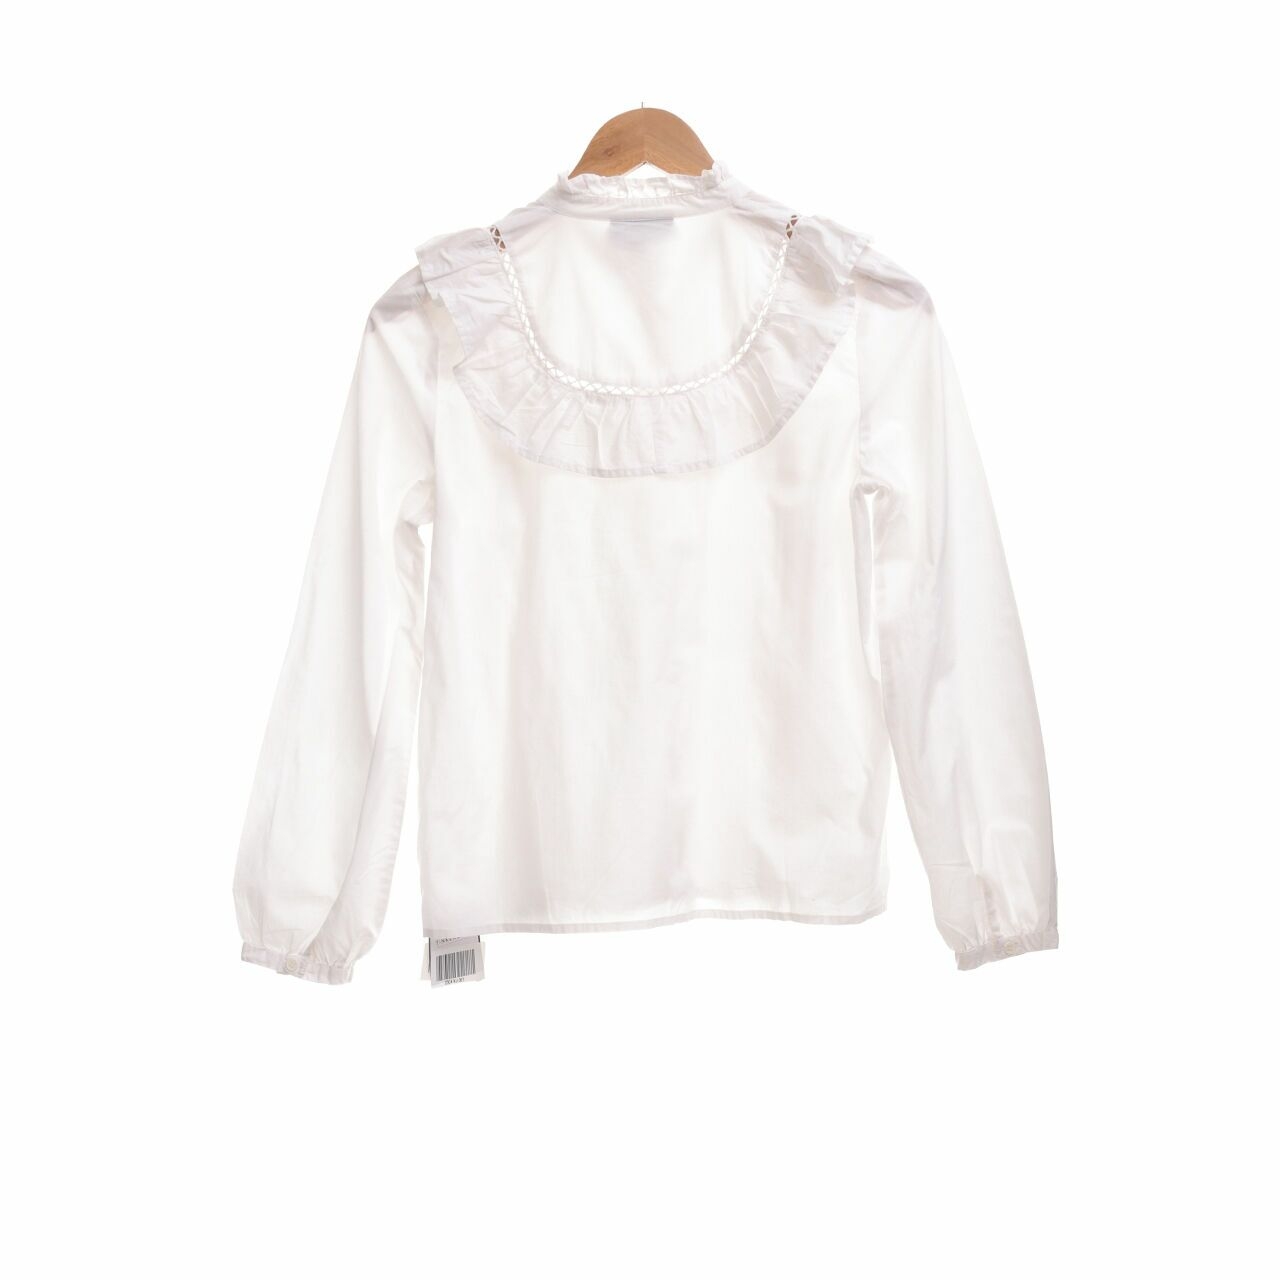 Topshop White Shirt